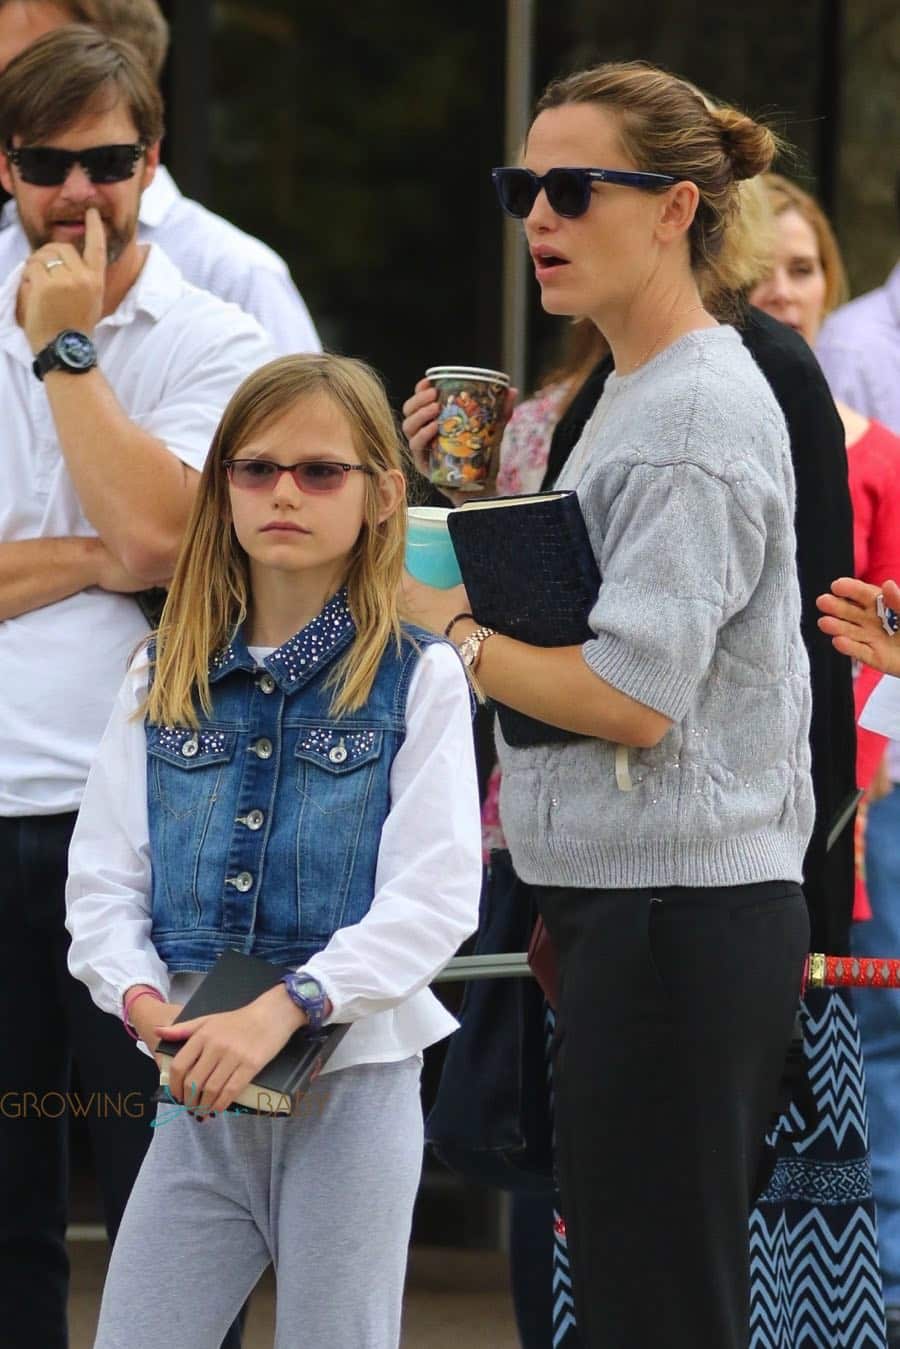 Jennifer Garner at church with daughter Violet affleck - Growing Your Baby